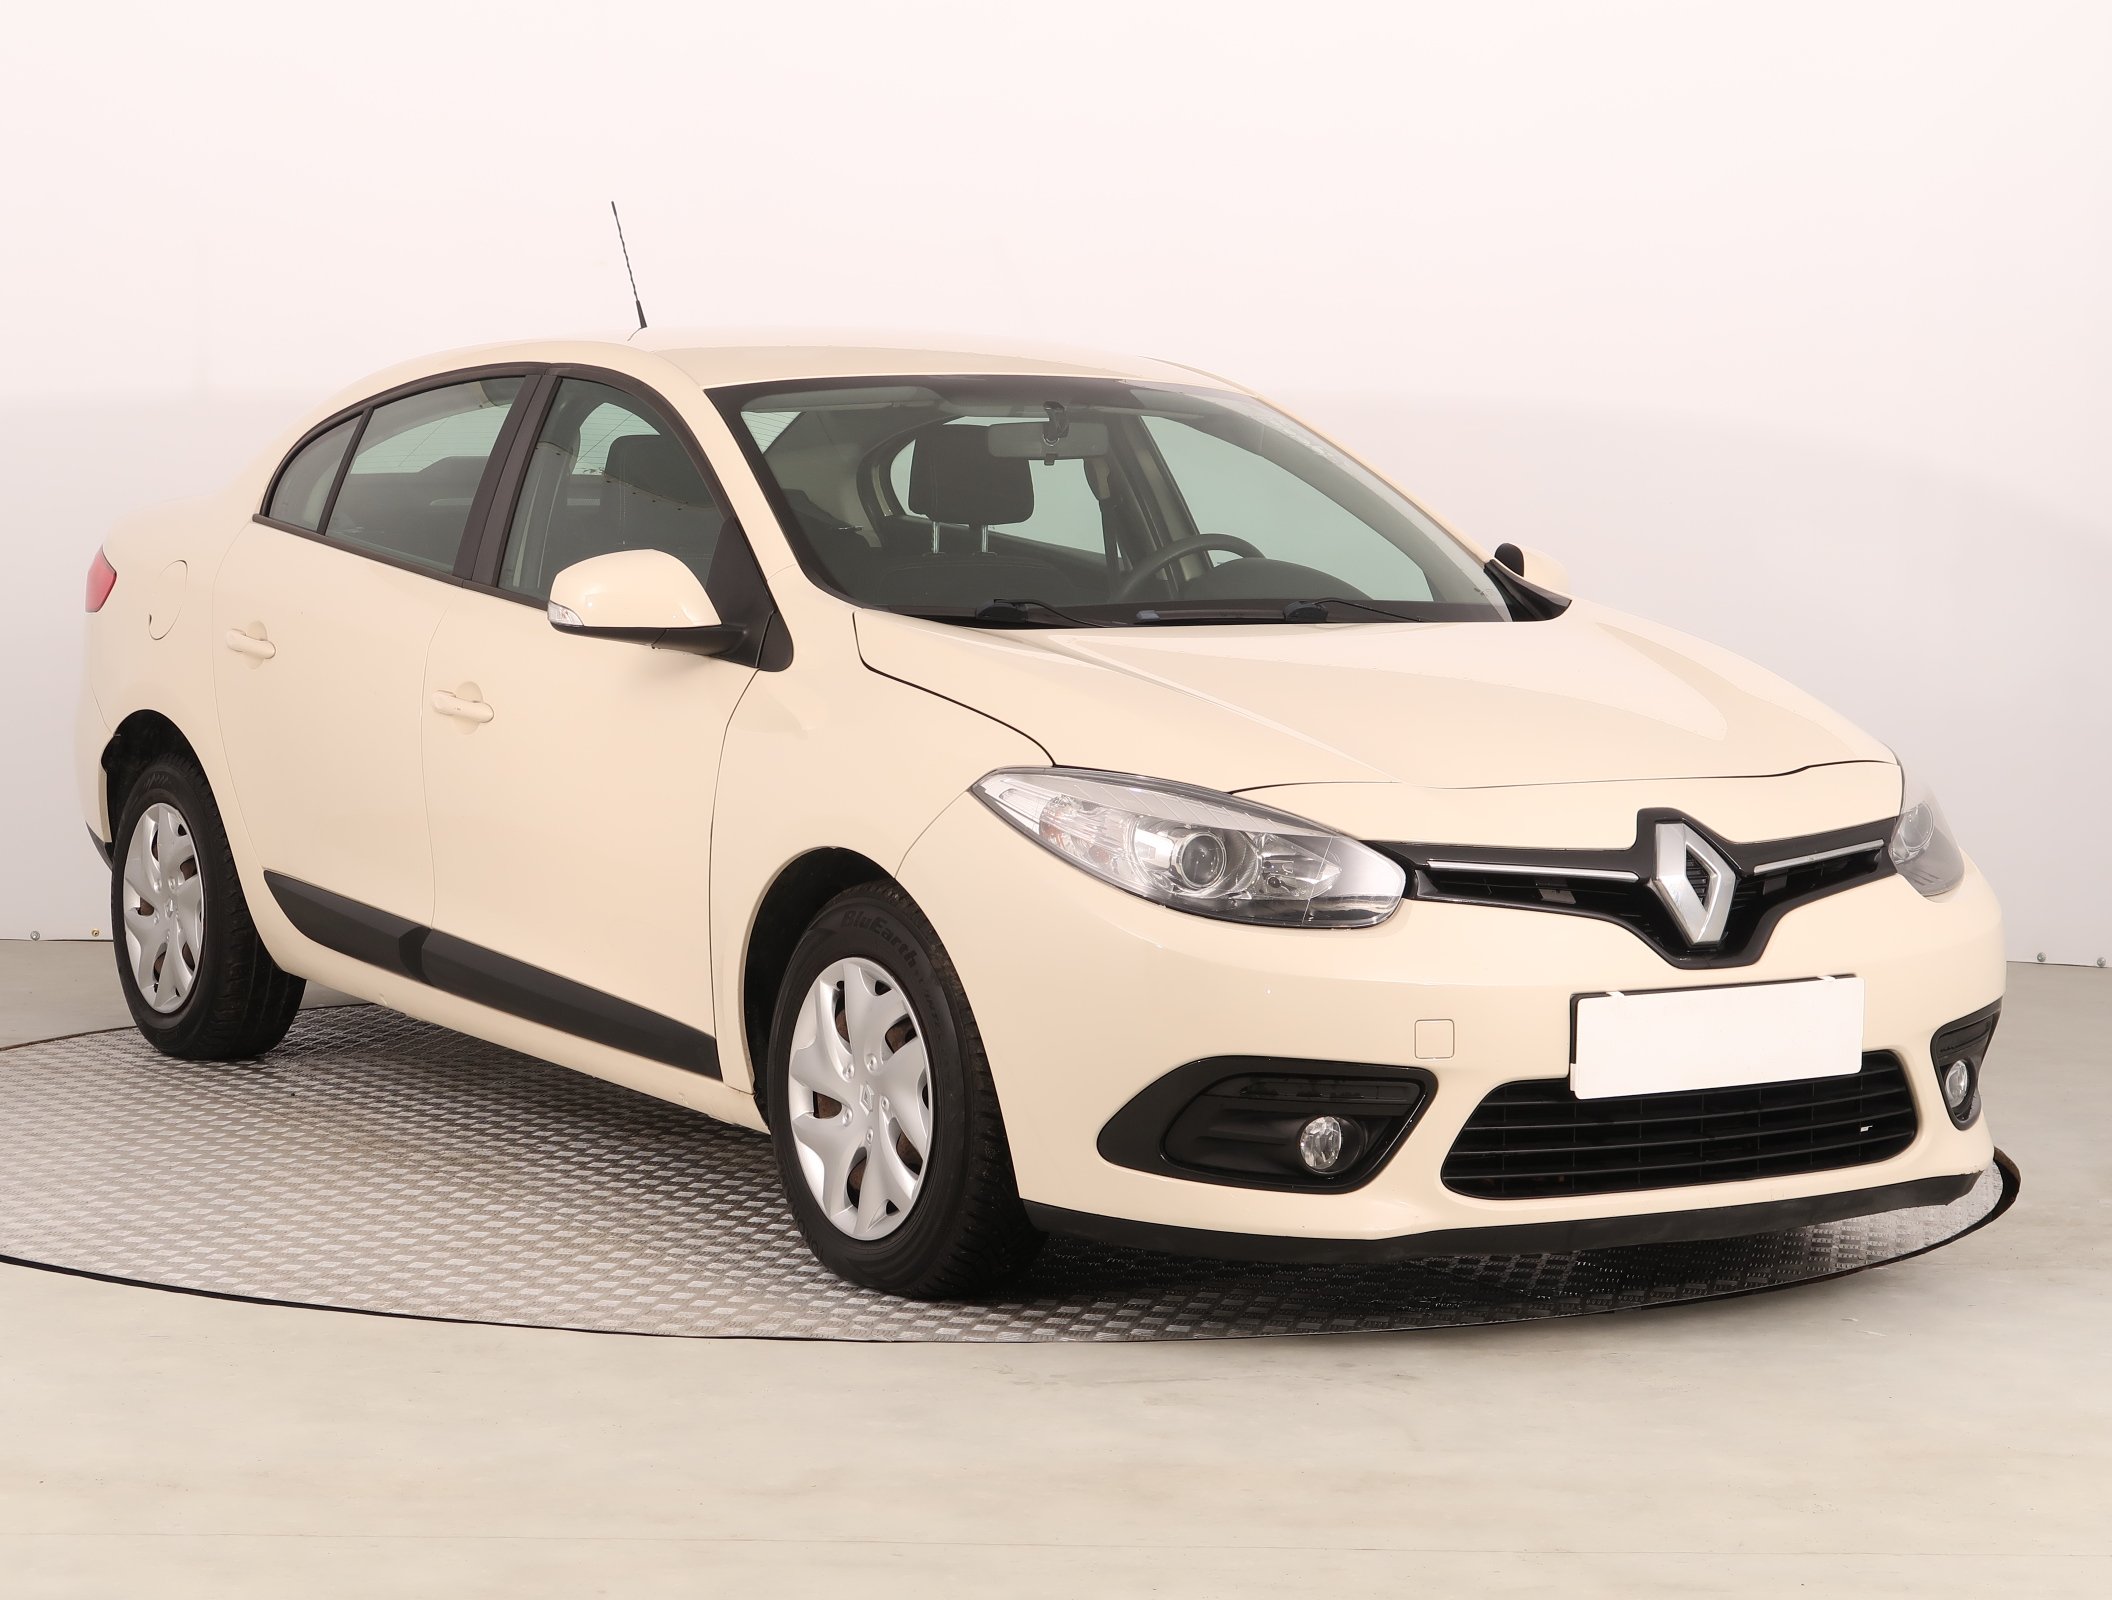 Renault Fluence 1.6 MPI Sedan 2014 - 1